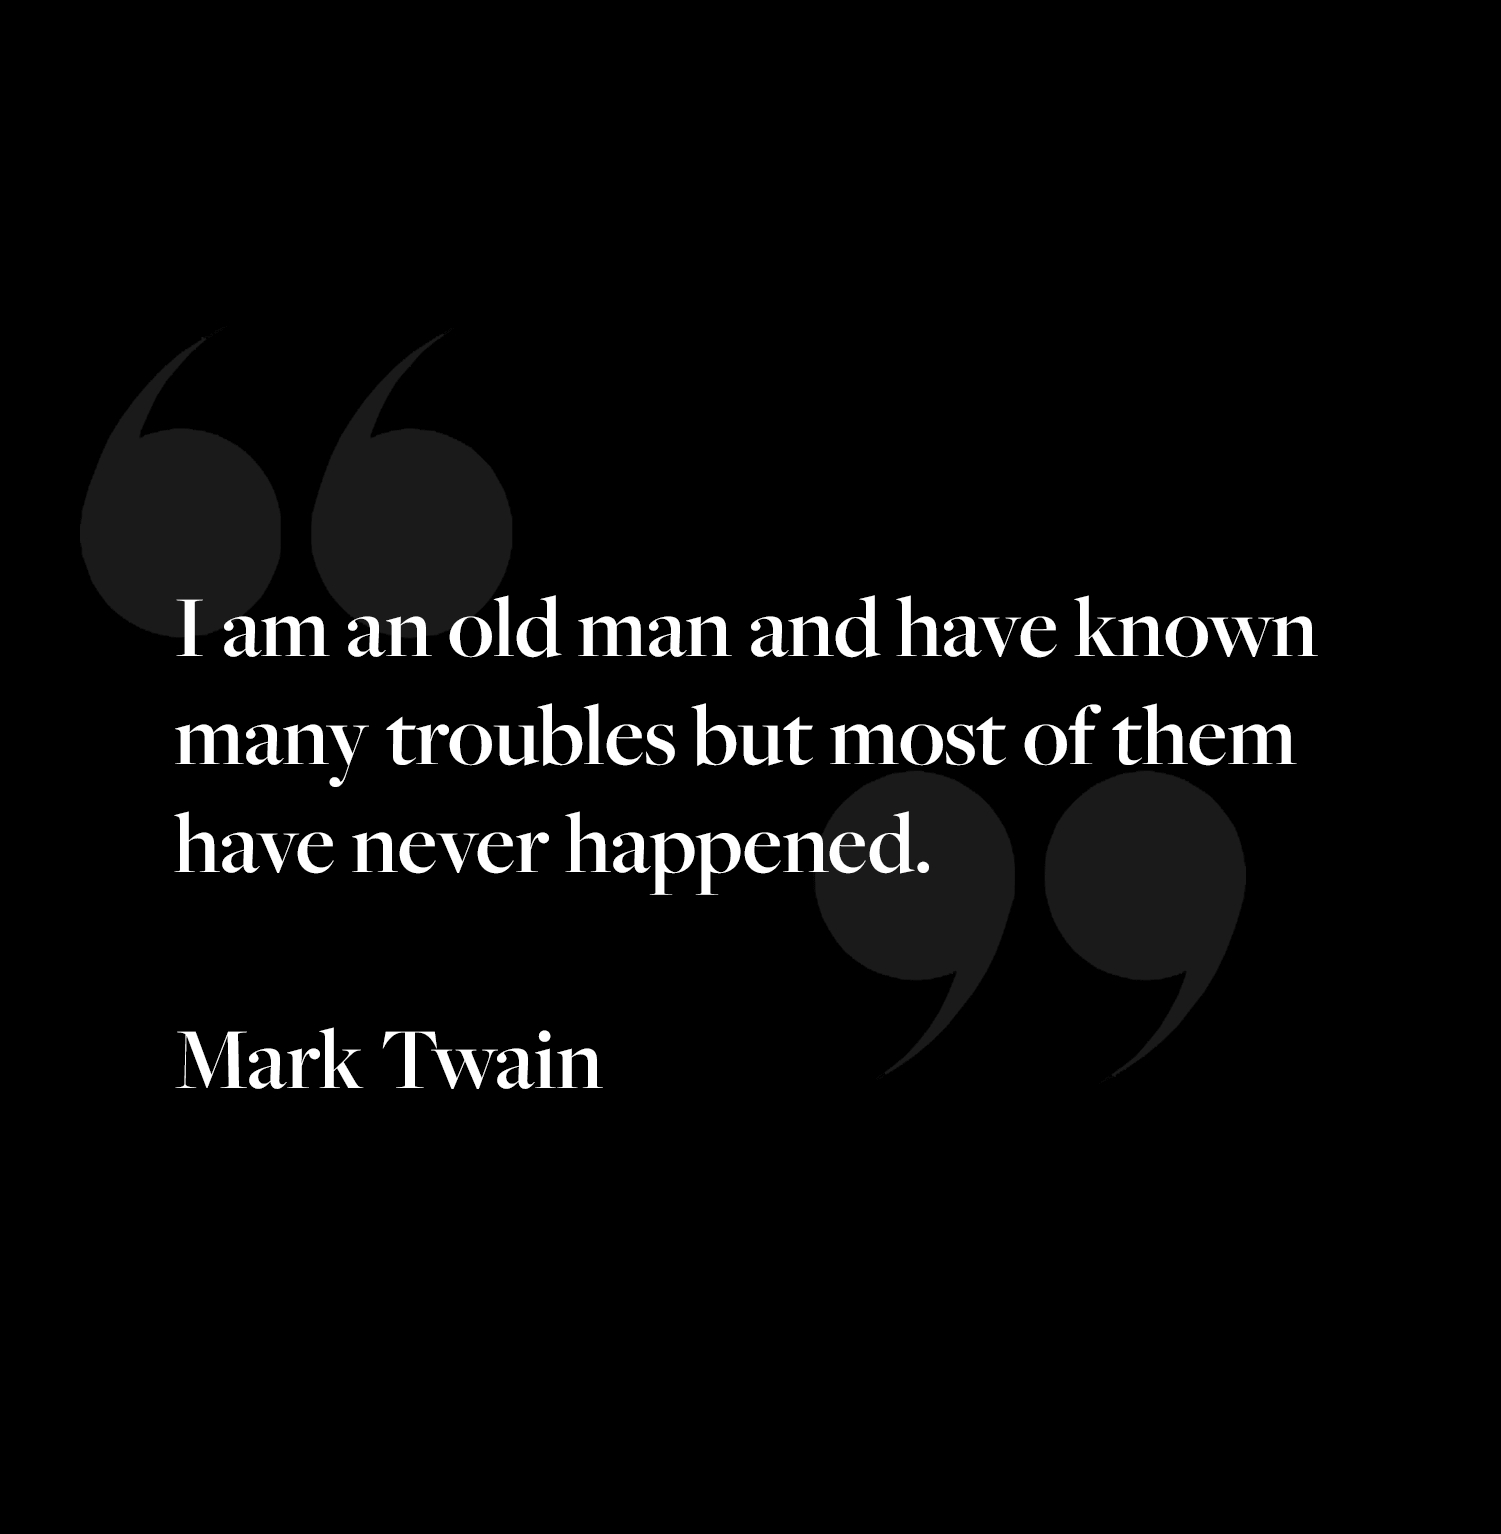 mark twain quote